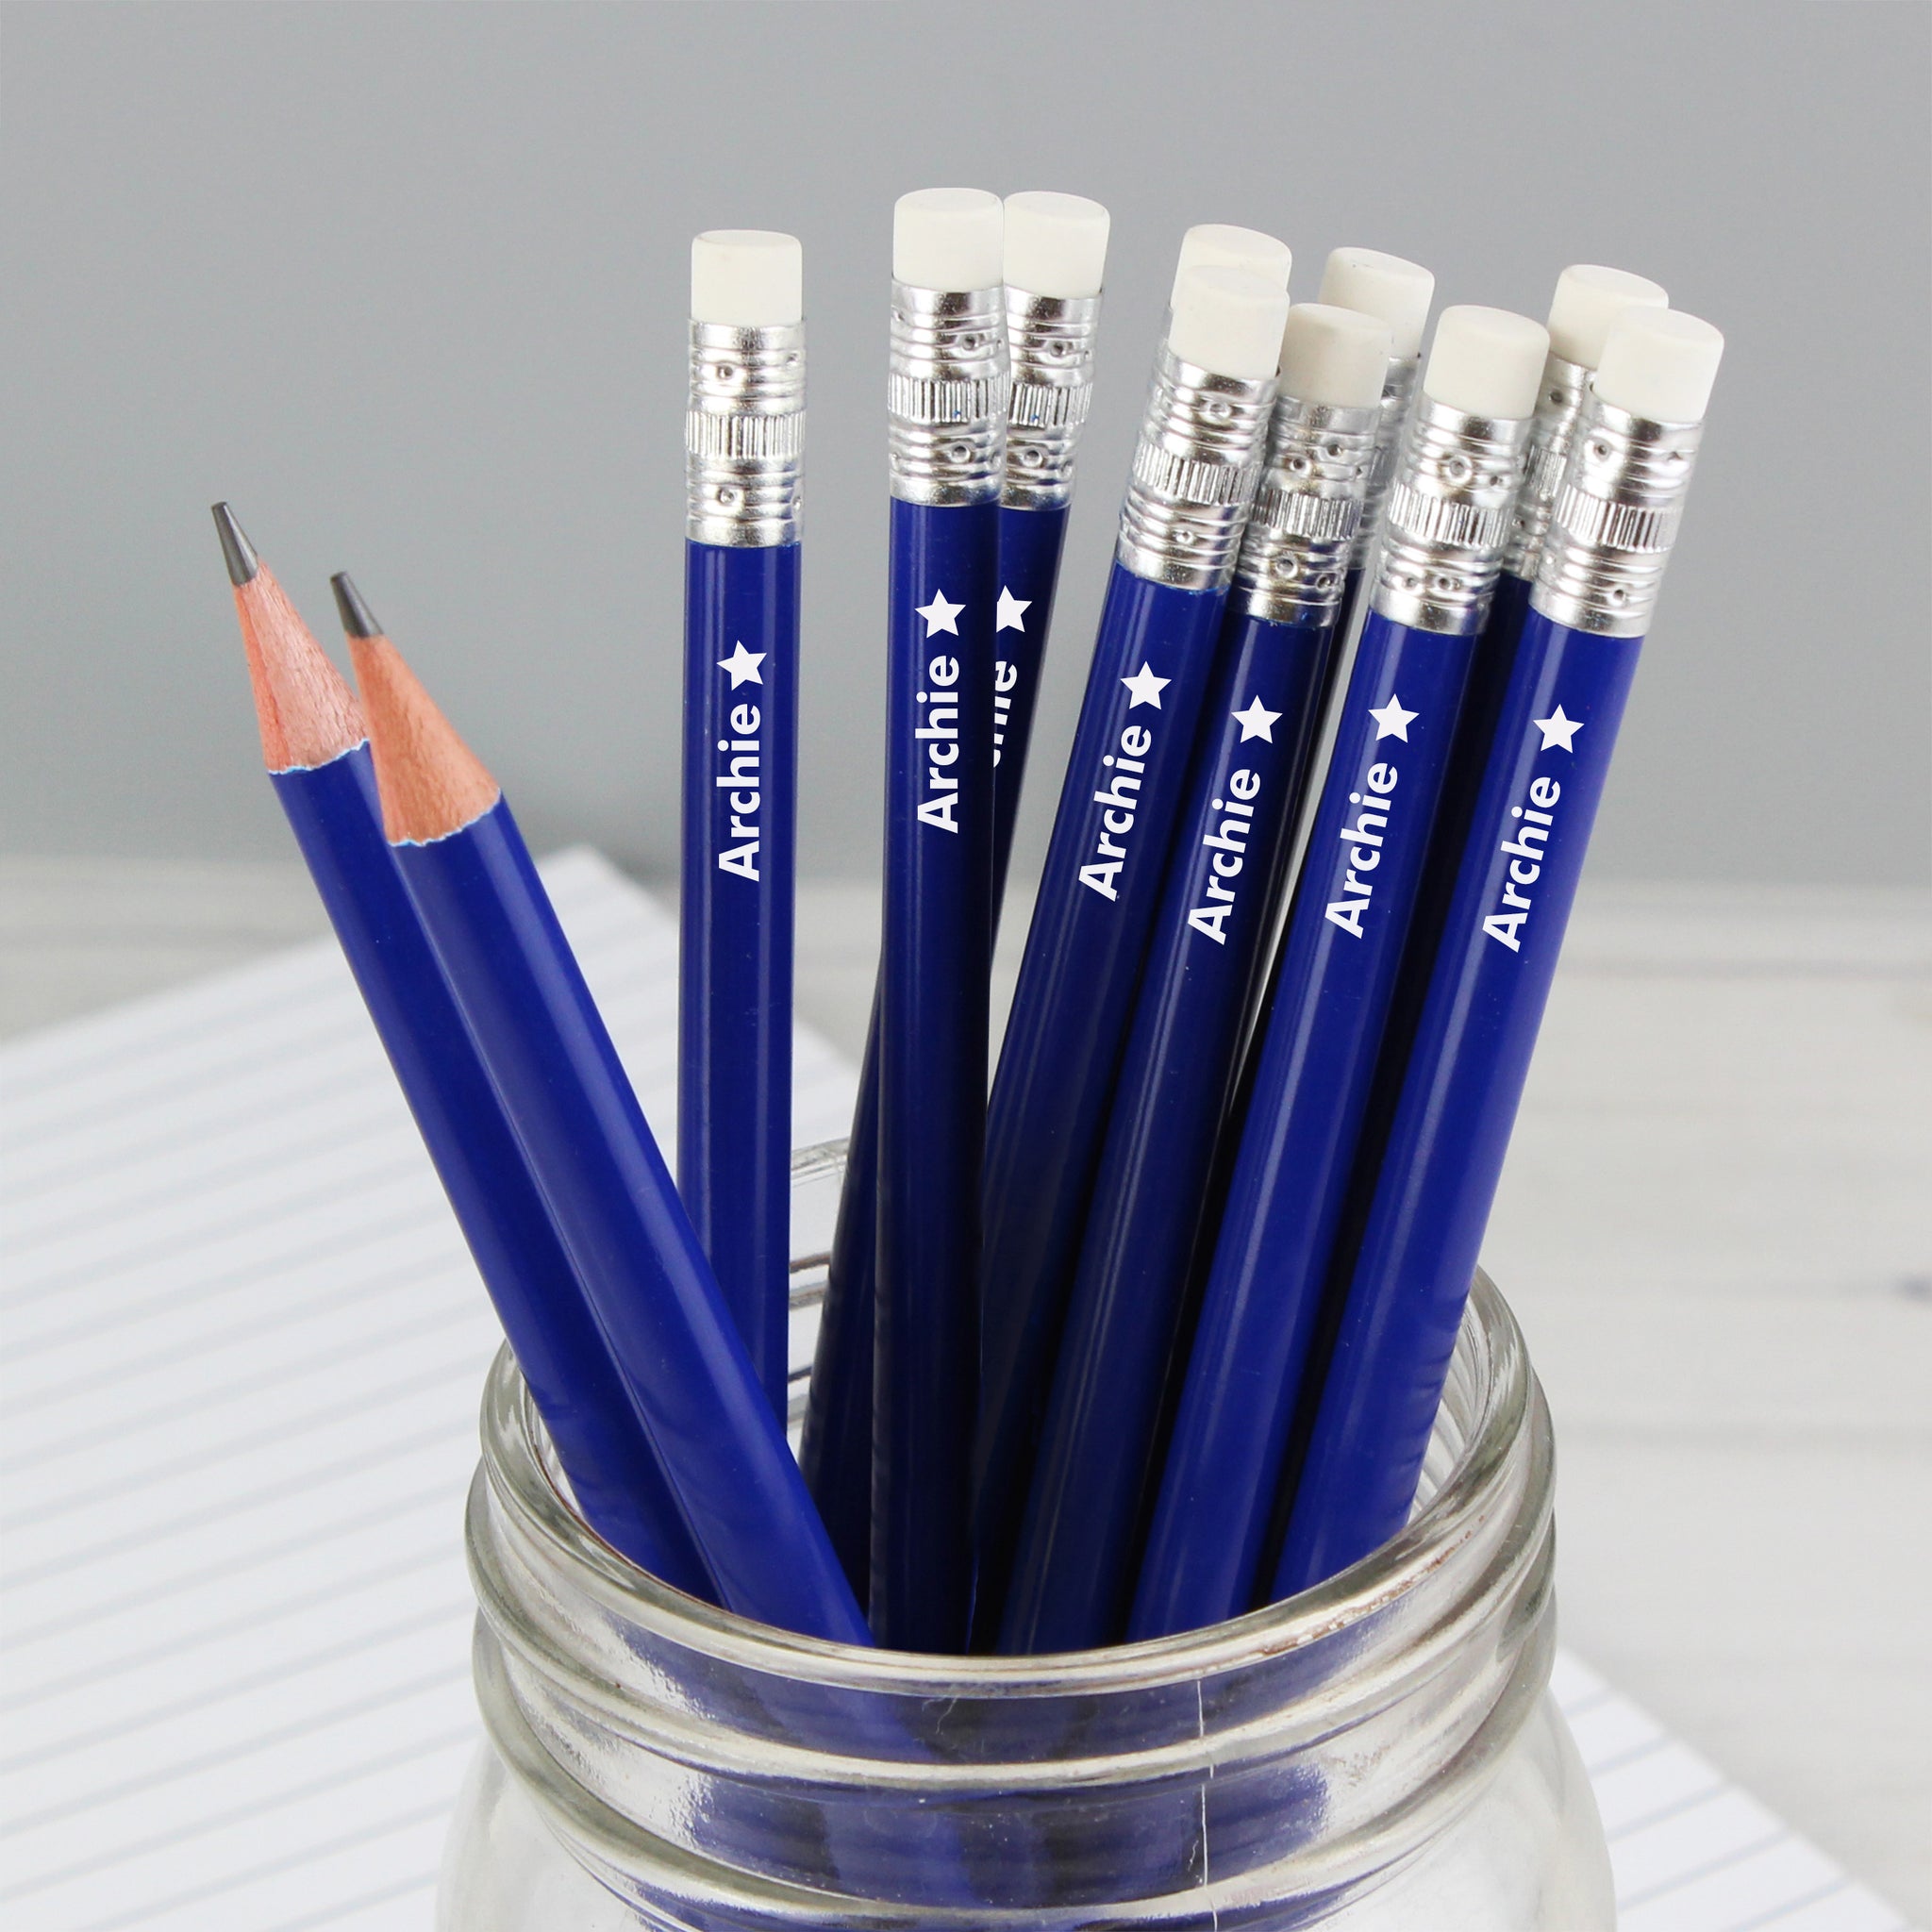 Matte Drawing Pencils – No More Graphite Shine